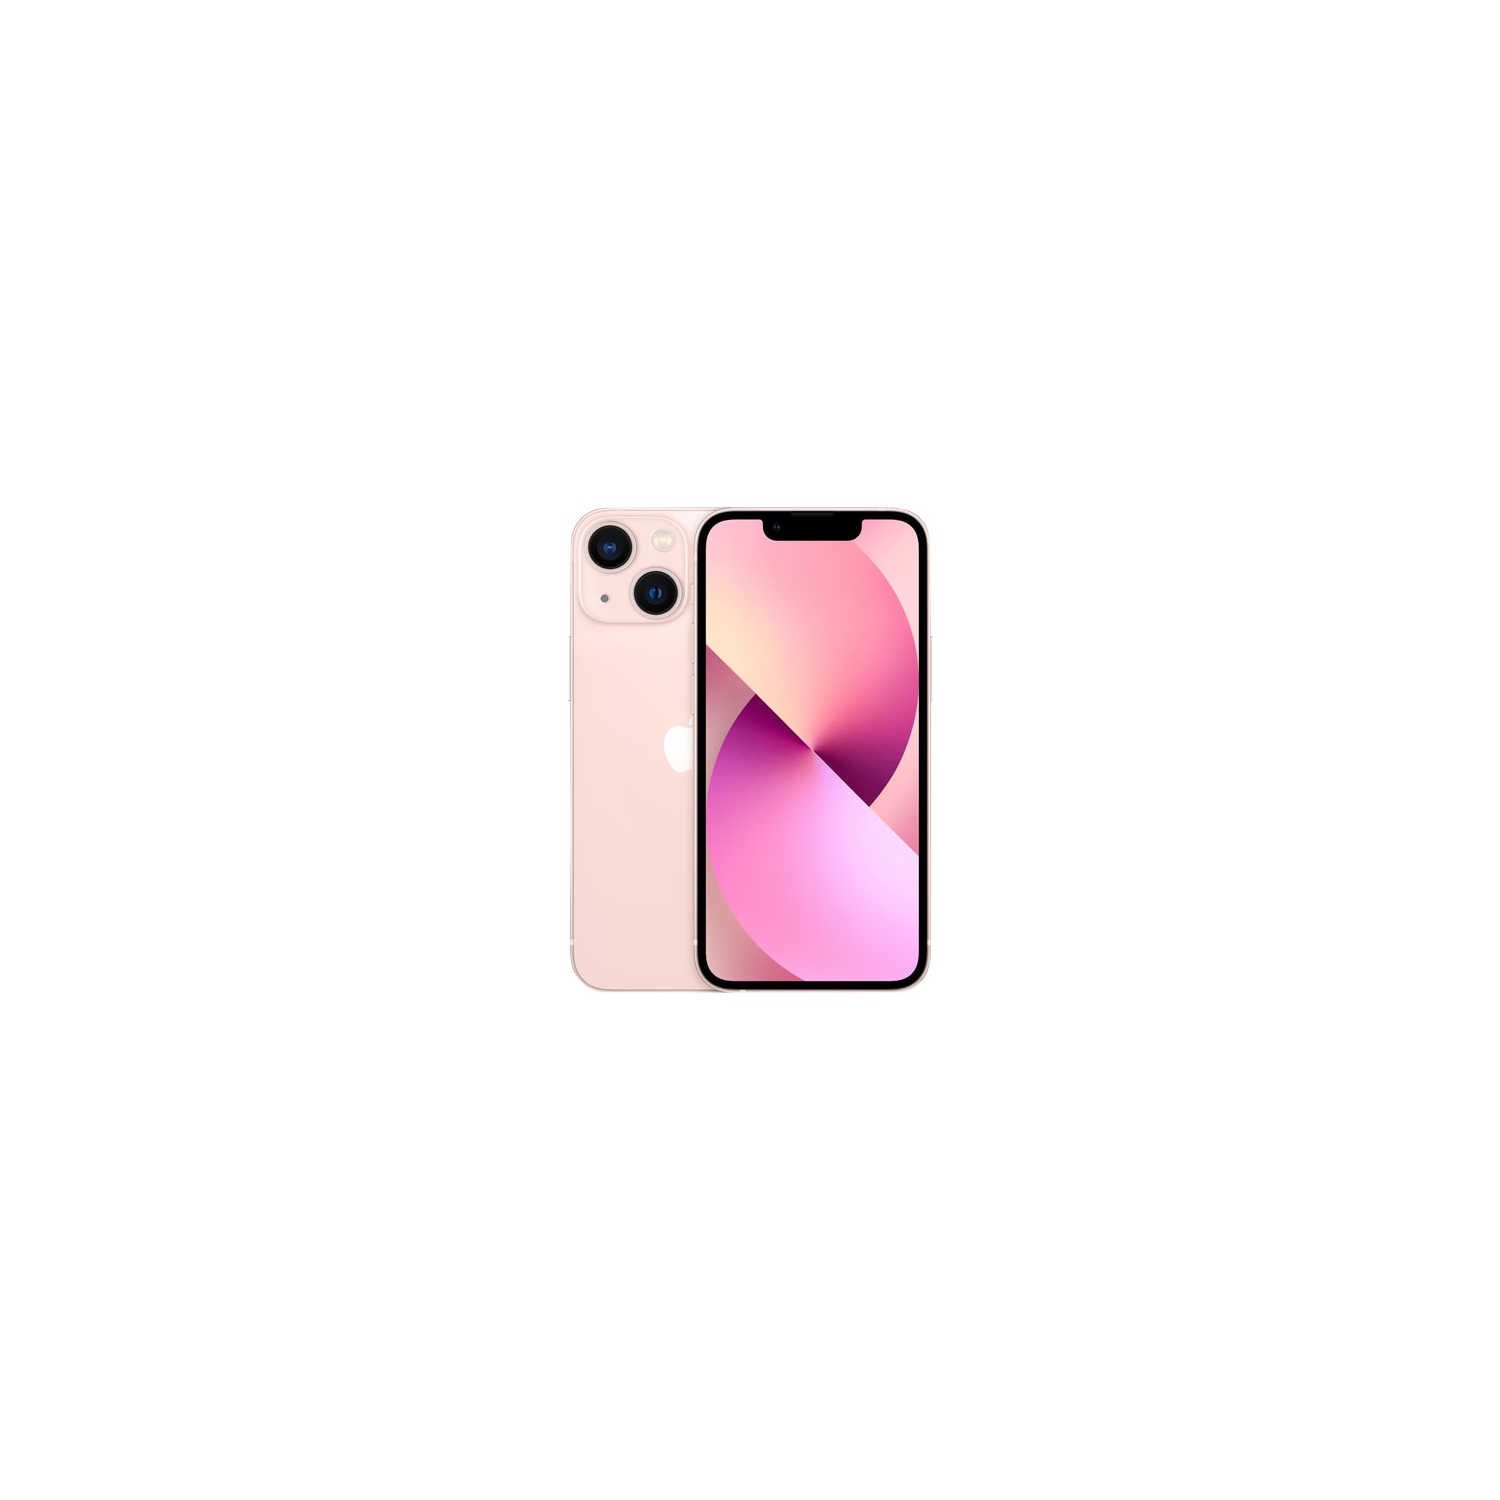 Apple iPhone 13 mini 256GB - Pink - Unlocked - Certified Refurbished